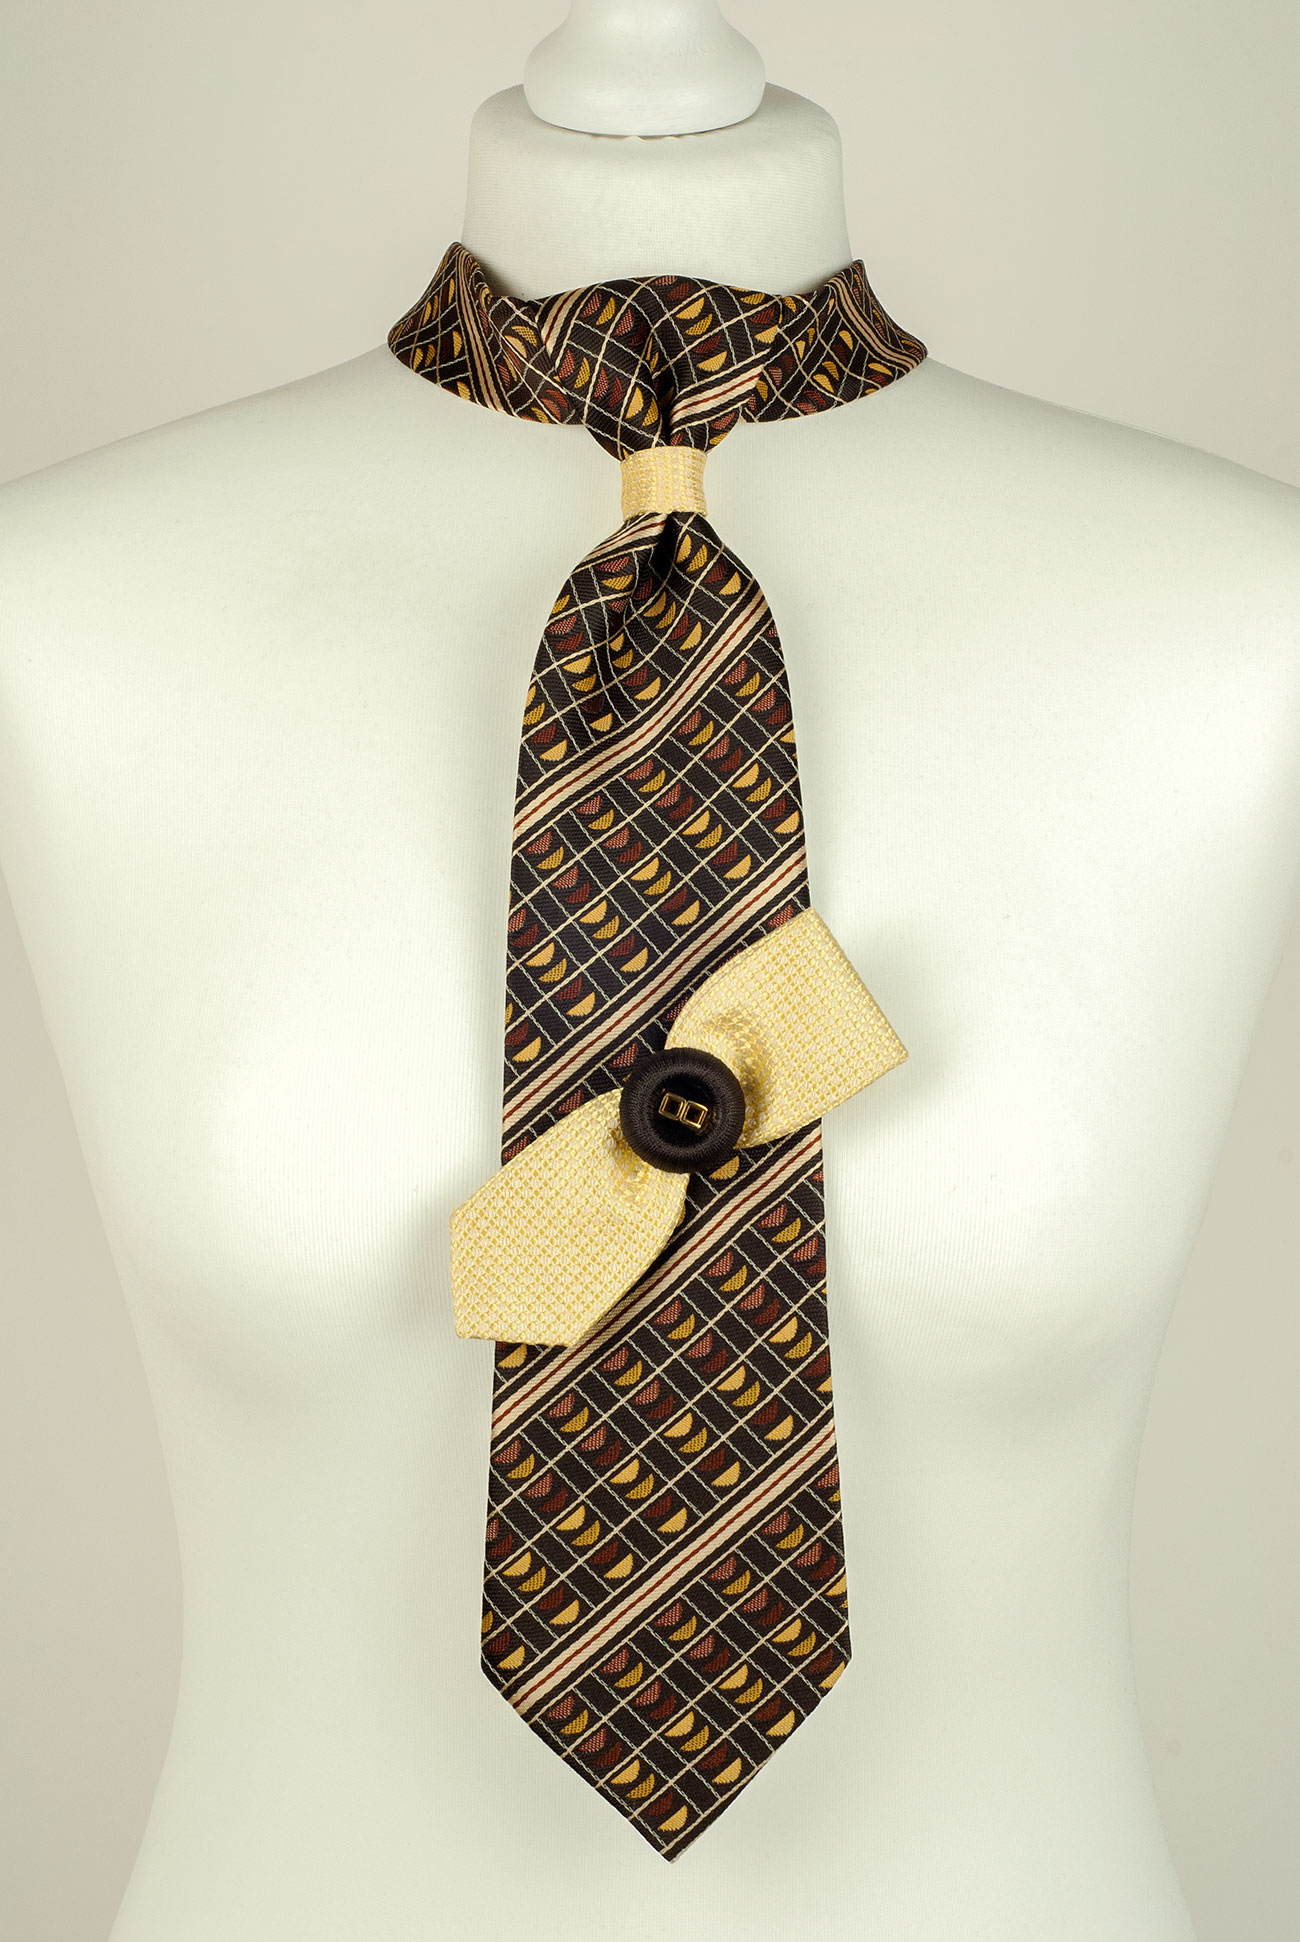 Retro Print Necktie Handmade from Two Vintage Ties